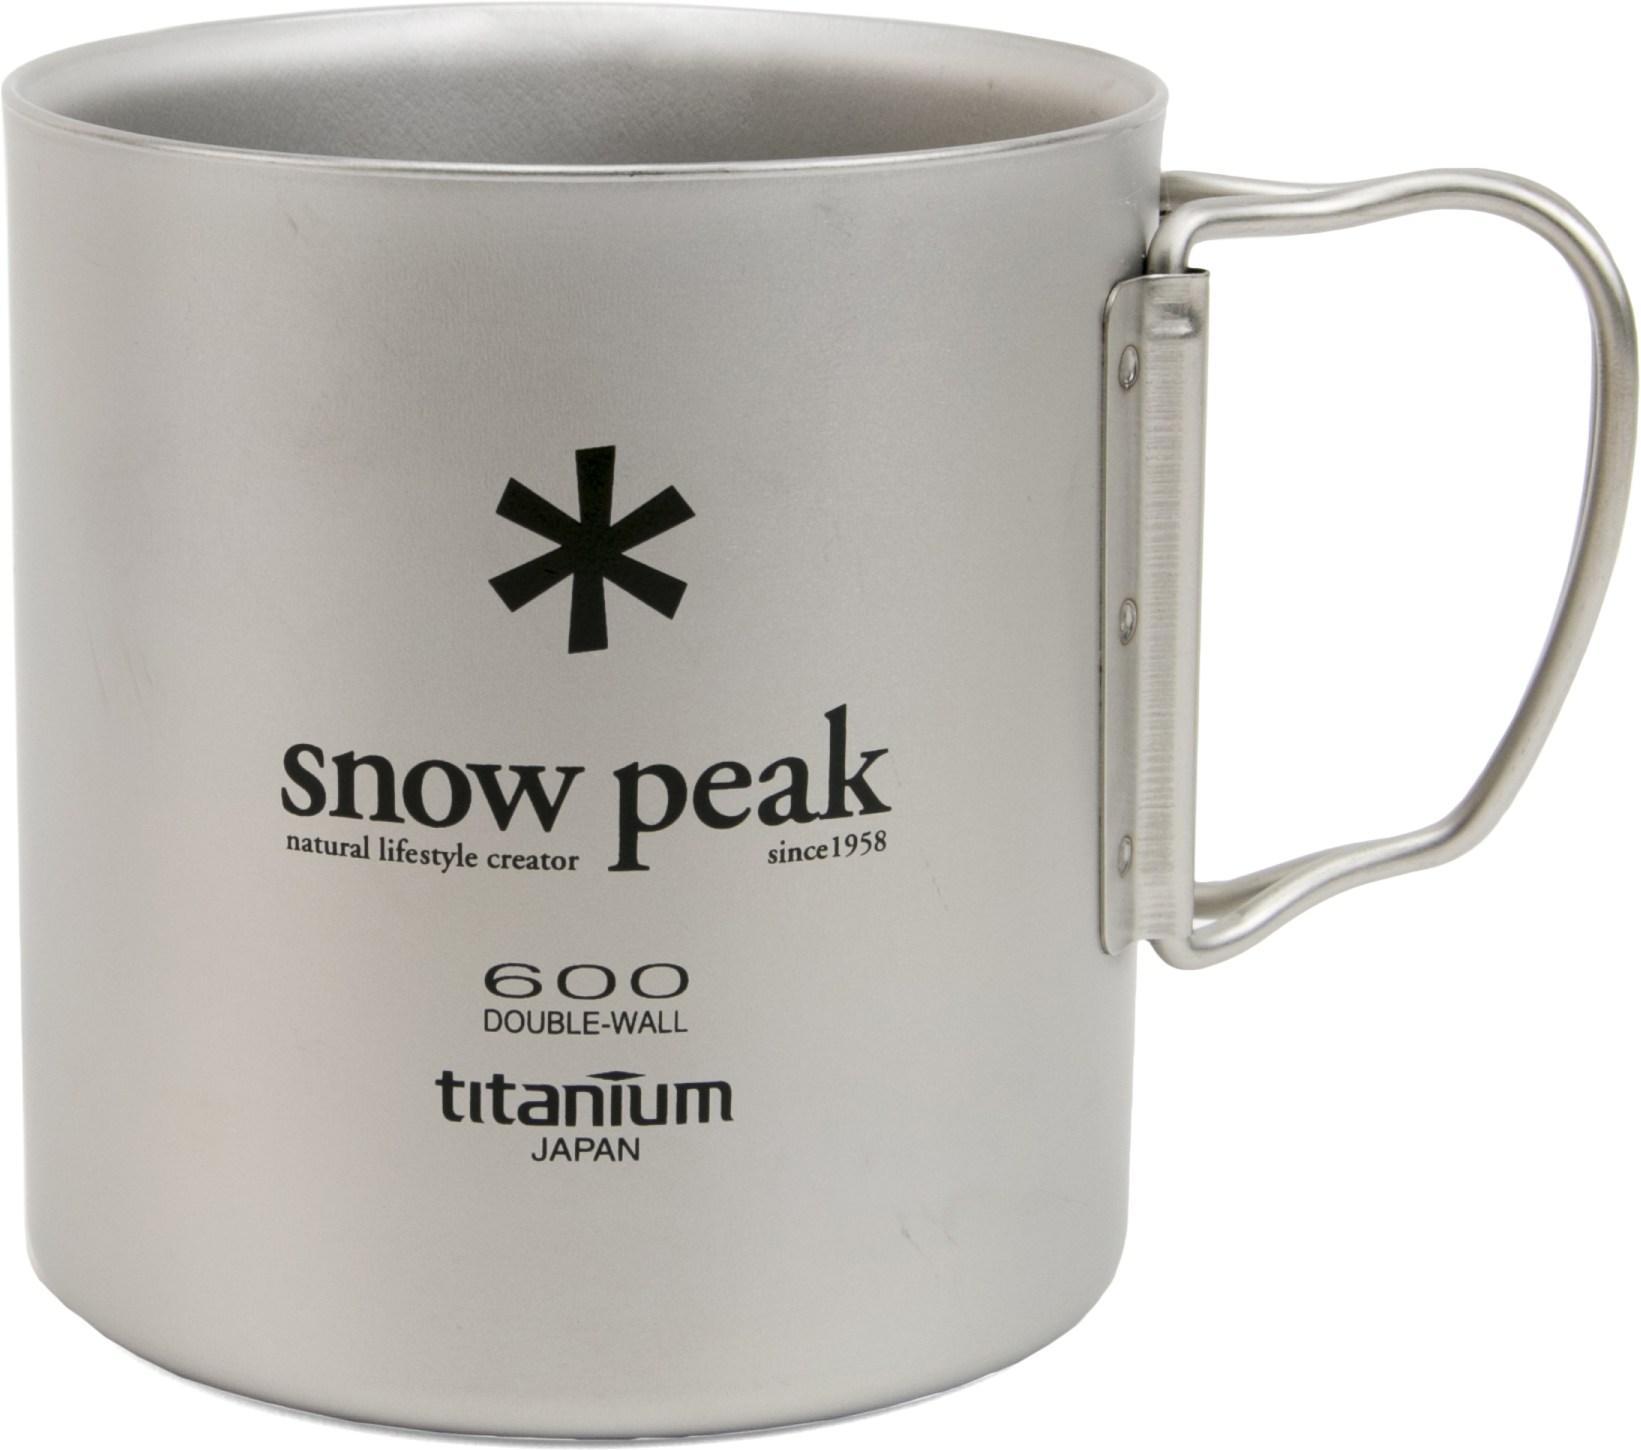 цена Титановая кружка с двойными стенками 600 Snow Peak, серый